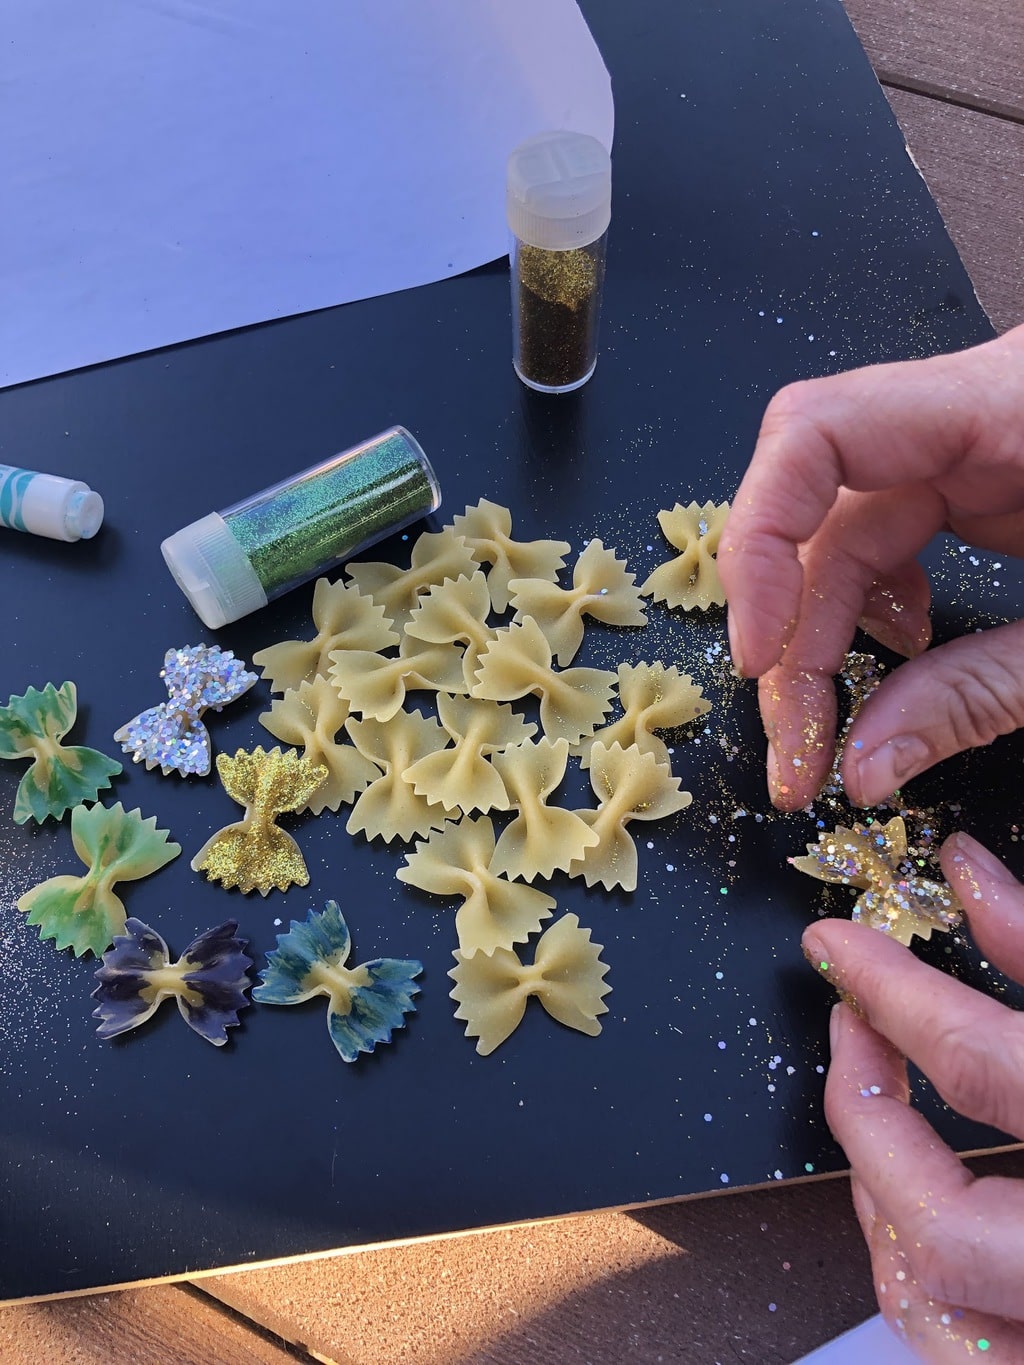 Sprinkling glitter on pasta butterflies